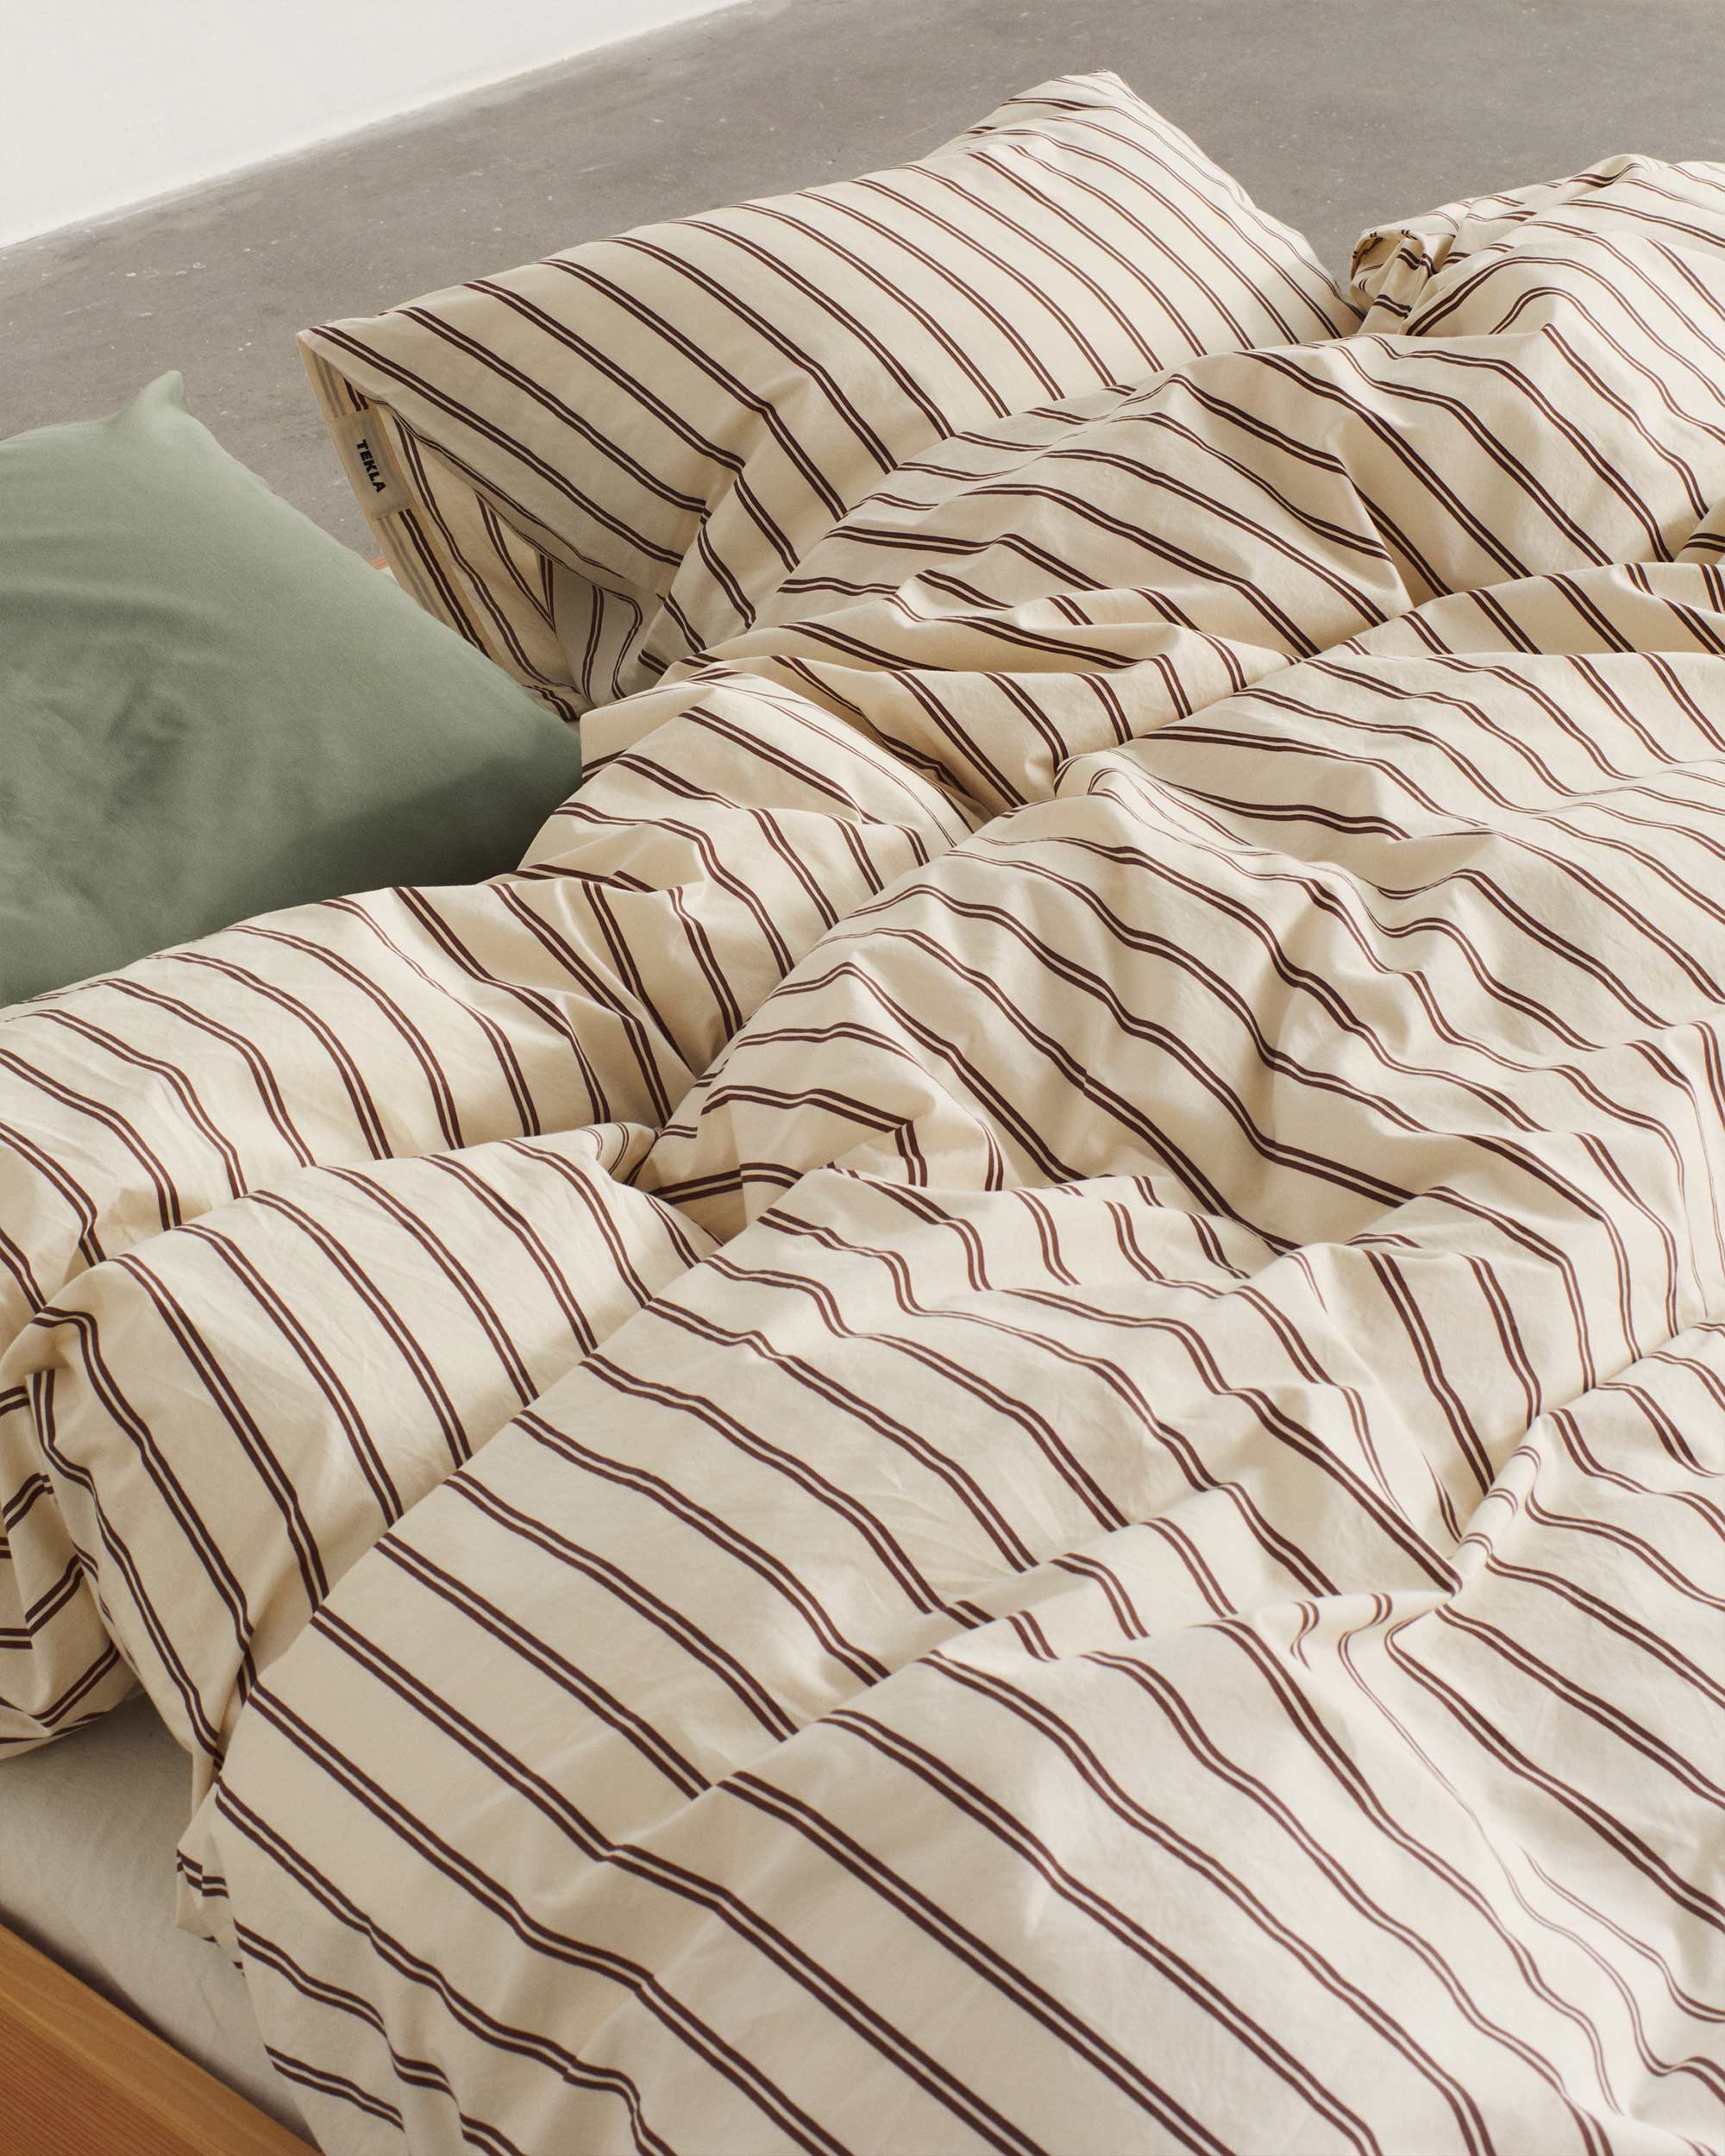 Hopper Stripes and Olive Green bedding